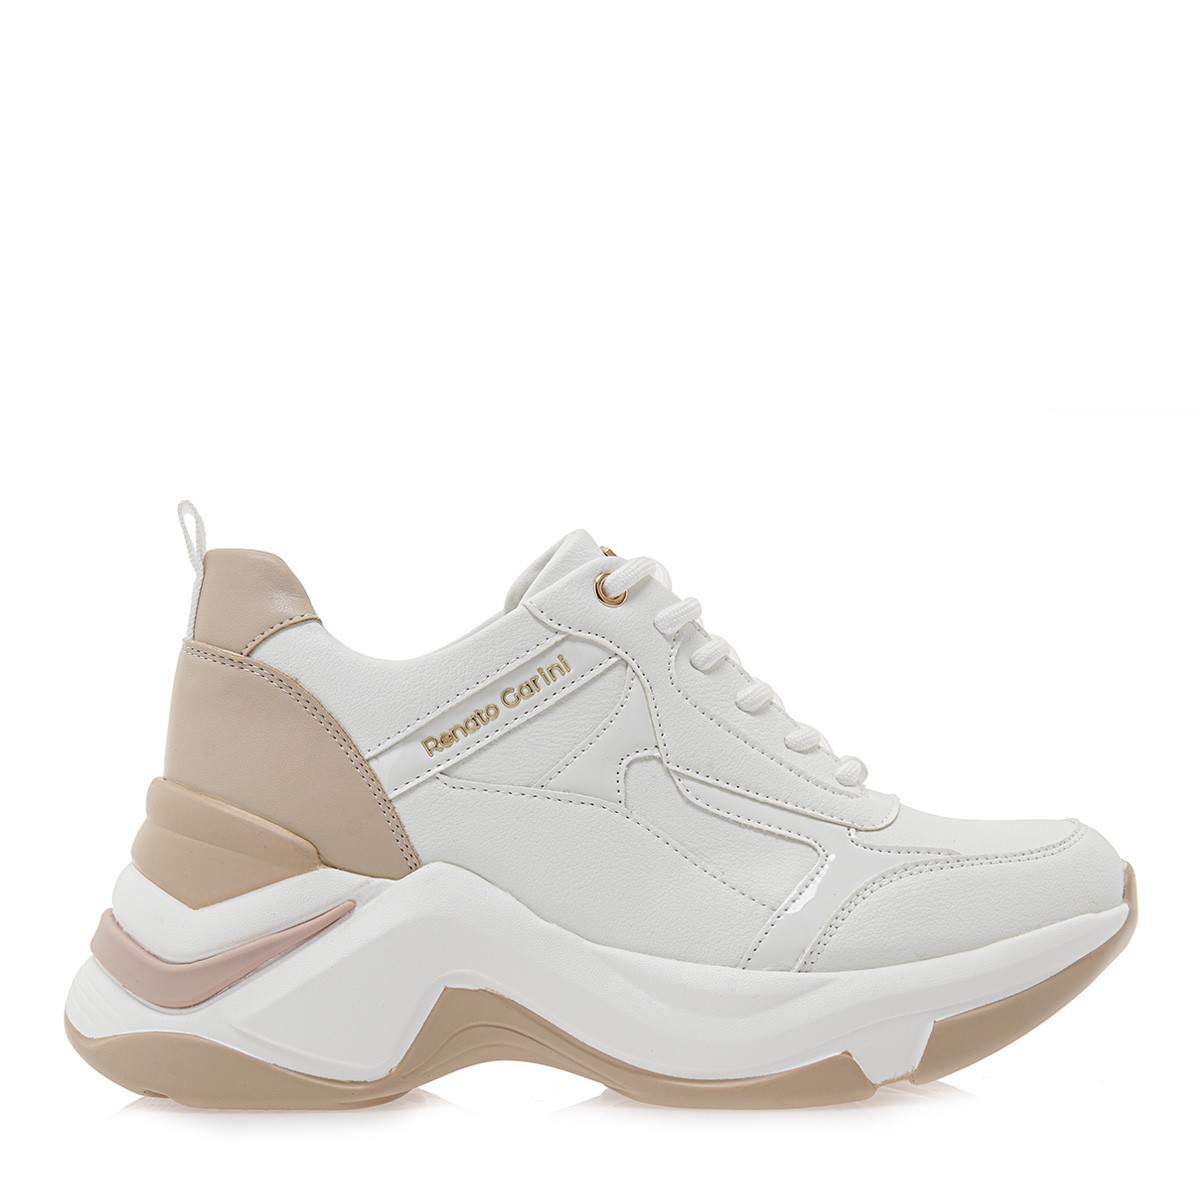 Renato Garini Γυναικεία Παπούτσια Sneakers 240-19R Λευκό Βερνί Μπέζ Q119R2404Y25